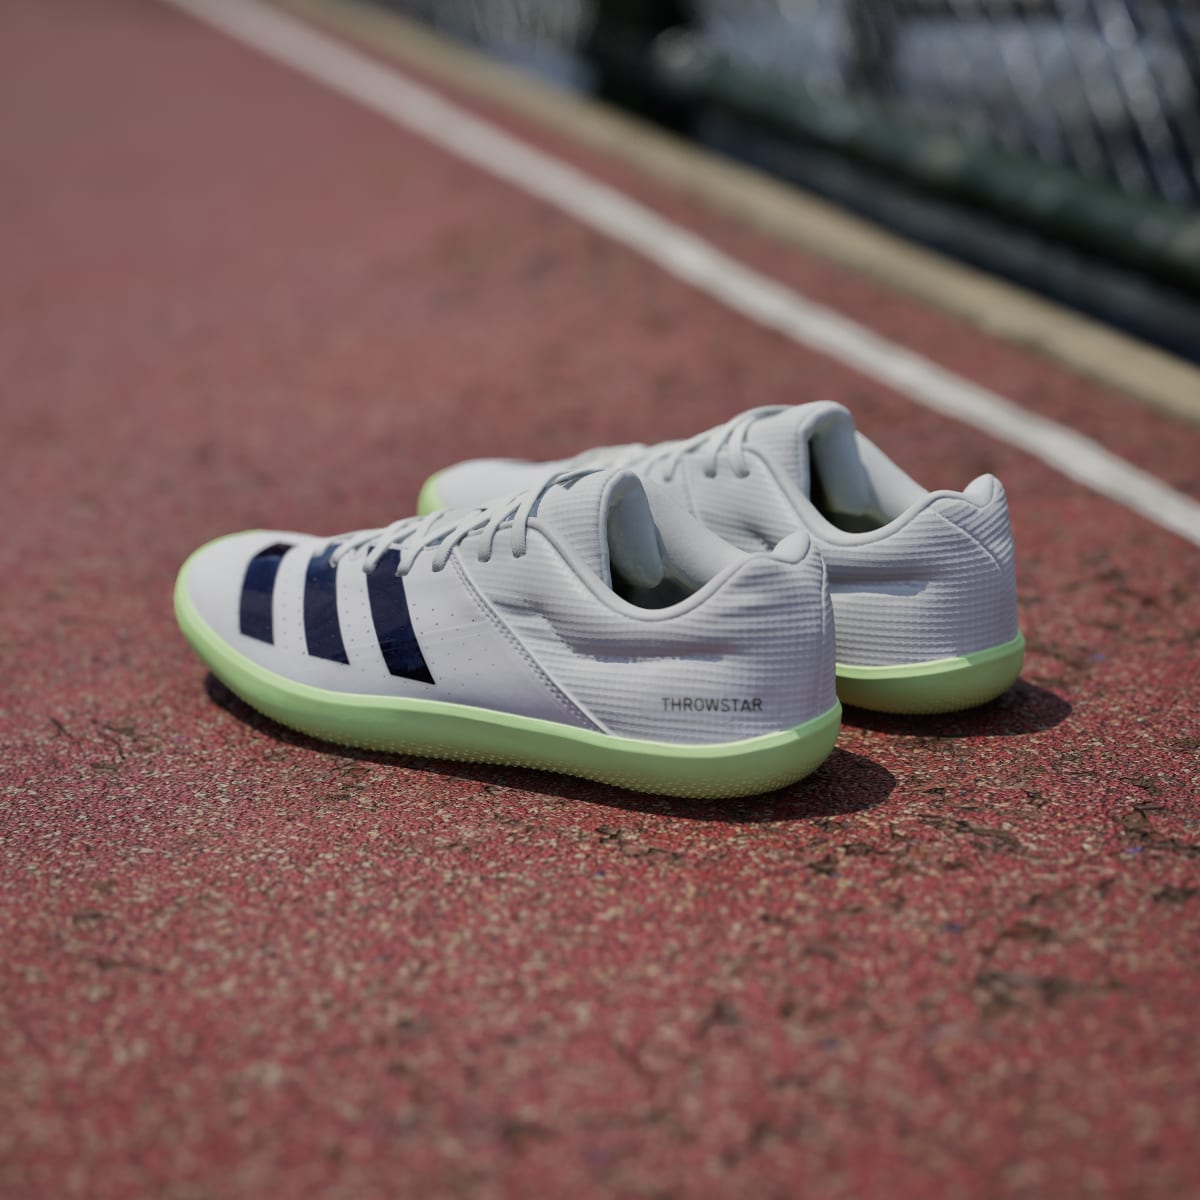 Adidas Scarpe da atletica Throwstar. 5